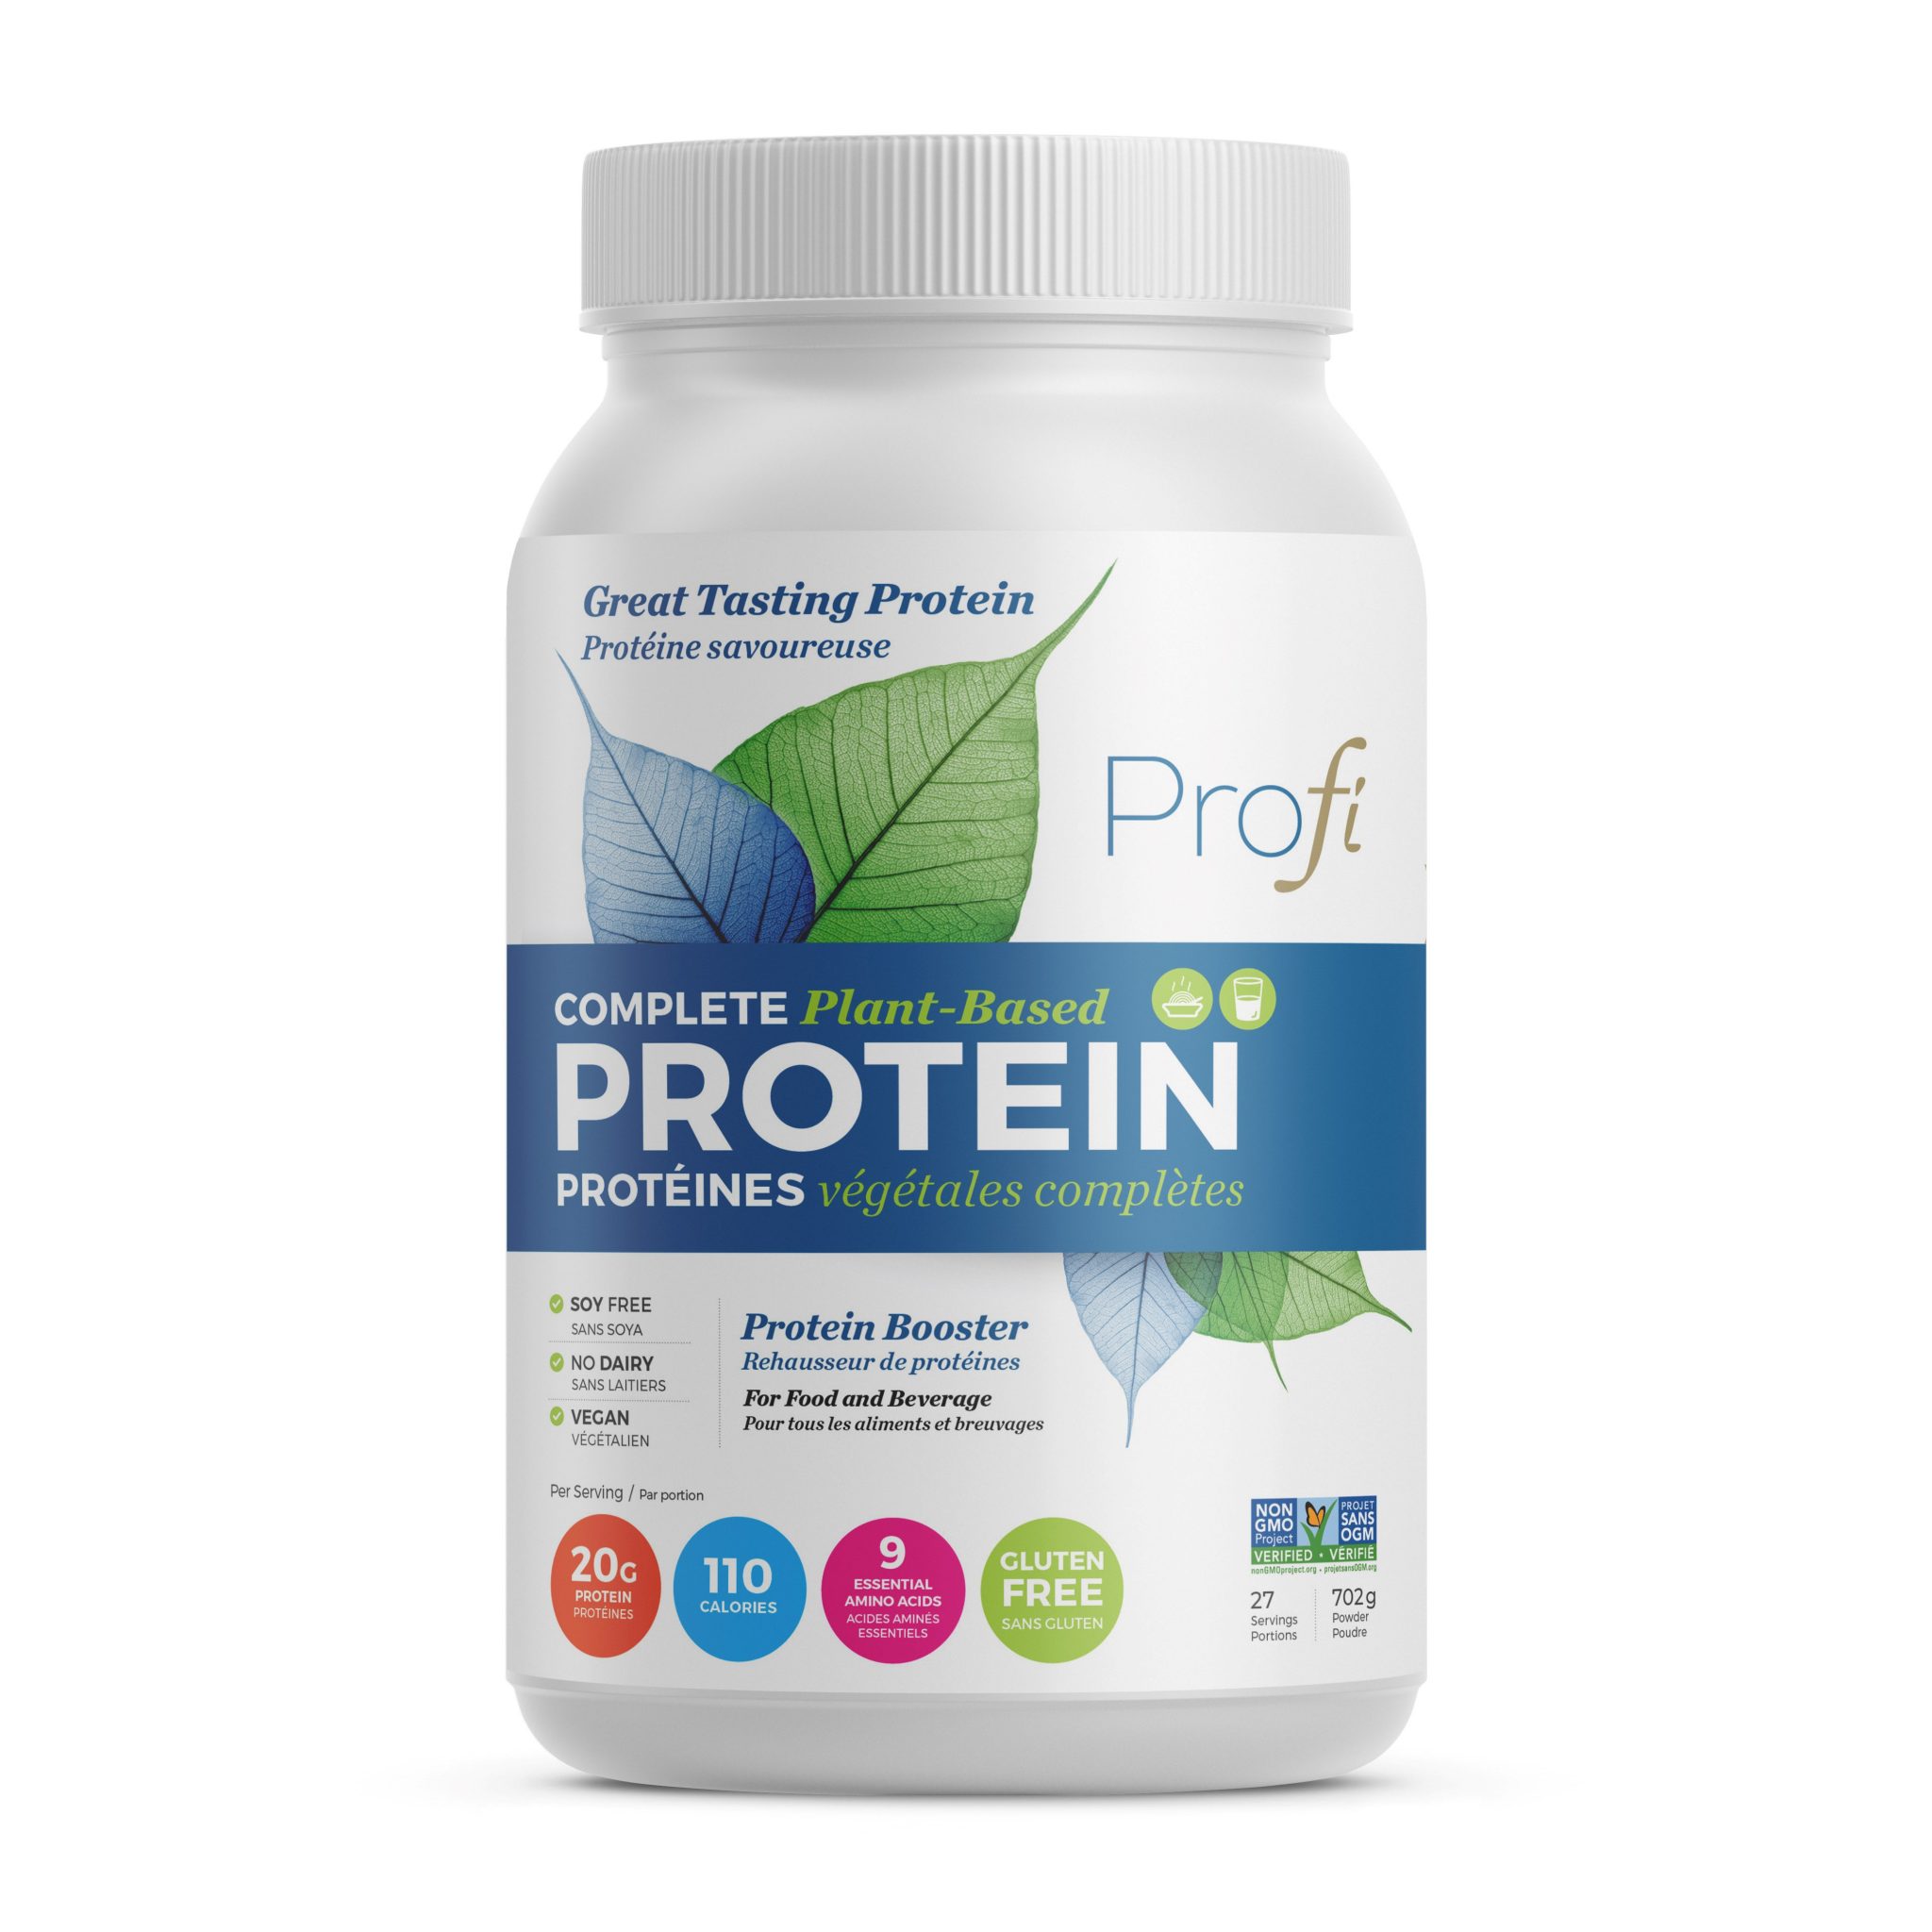 Profi Pro- Vegan Protein Booster 775g 